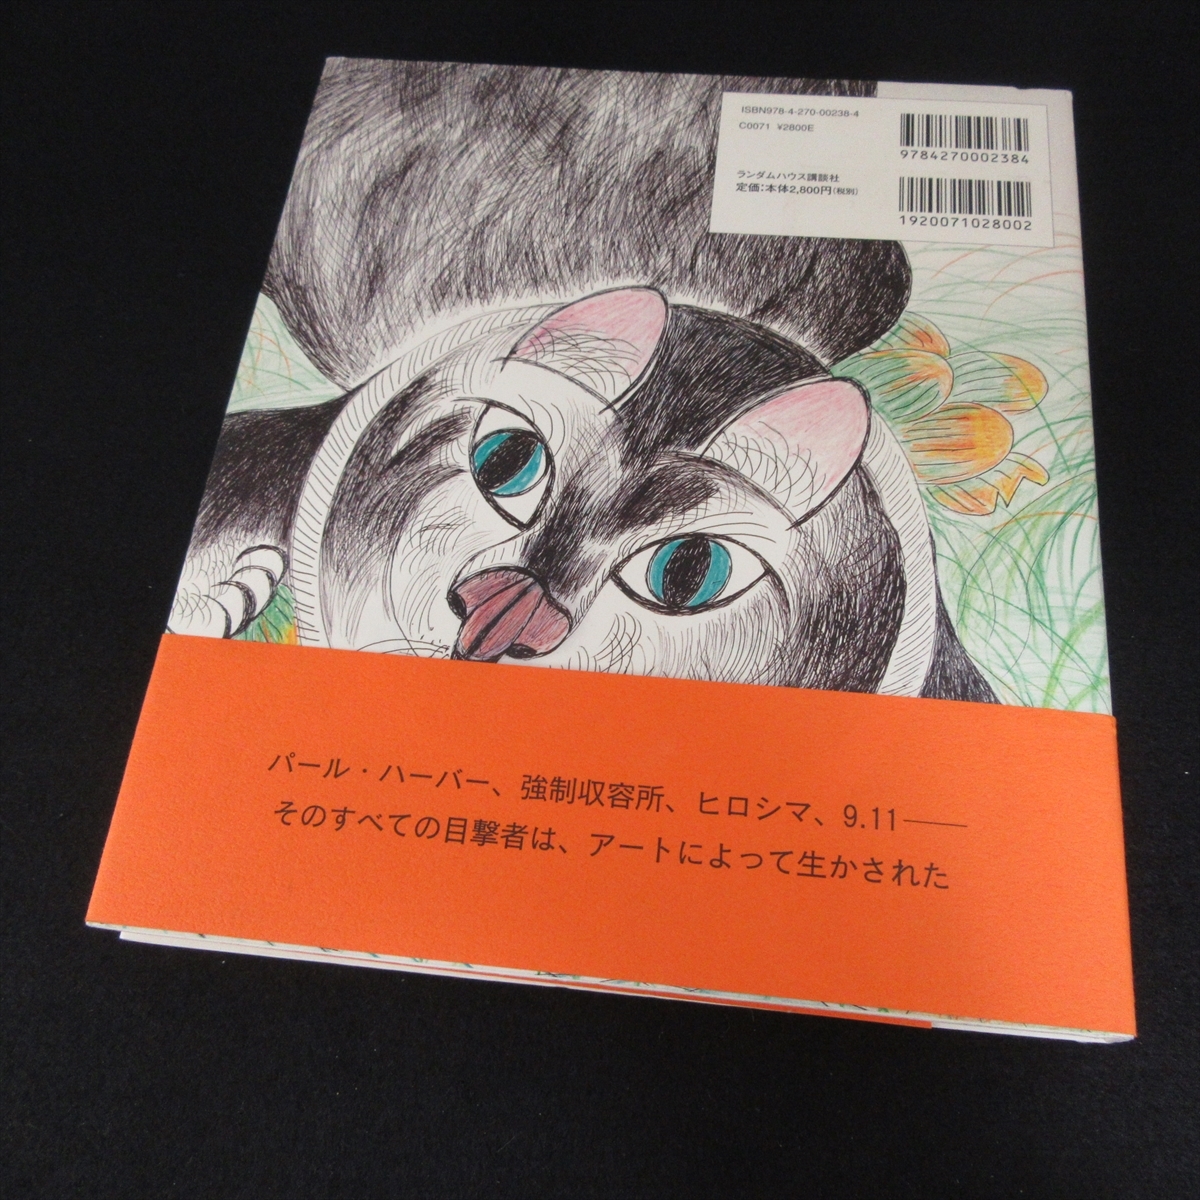 1.book@[ piece * Cat's tsu[ millimeter kitani. cat ] picture compilation ] # free shipping jimi-*tsu Tom * millimeter kitani(.* words )masa*yo deer wa( compilation work ) *